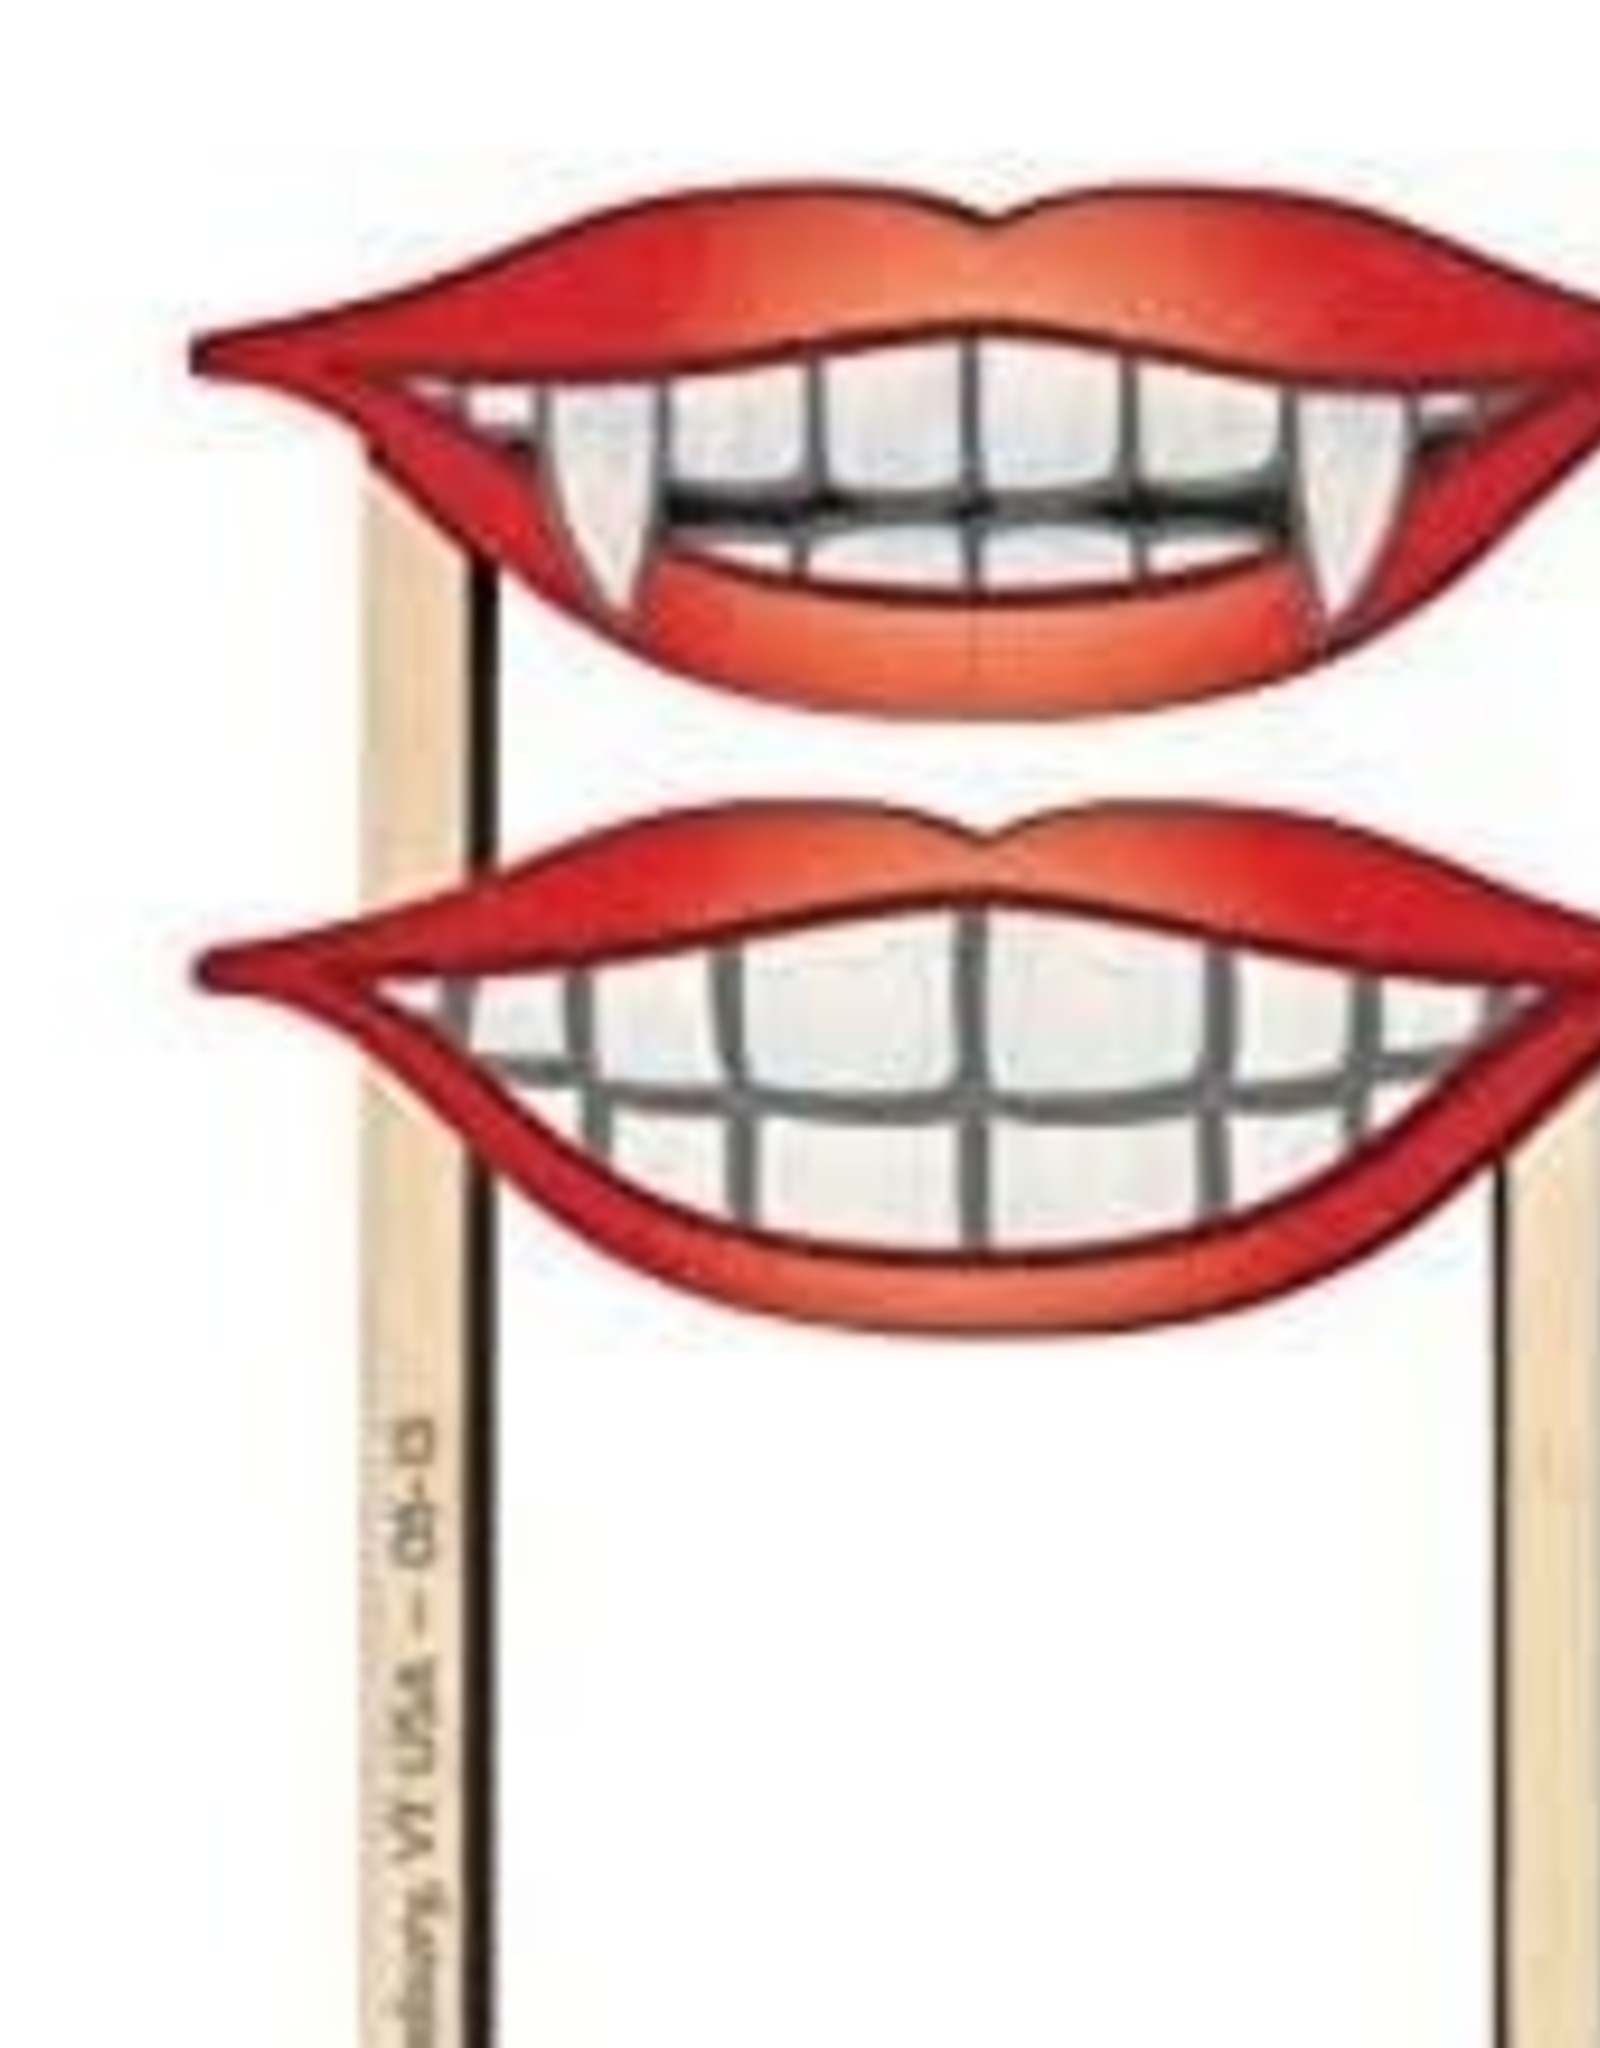 Maple Landmark Silly Sticks: Vampire Teeth